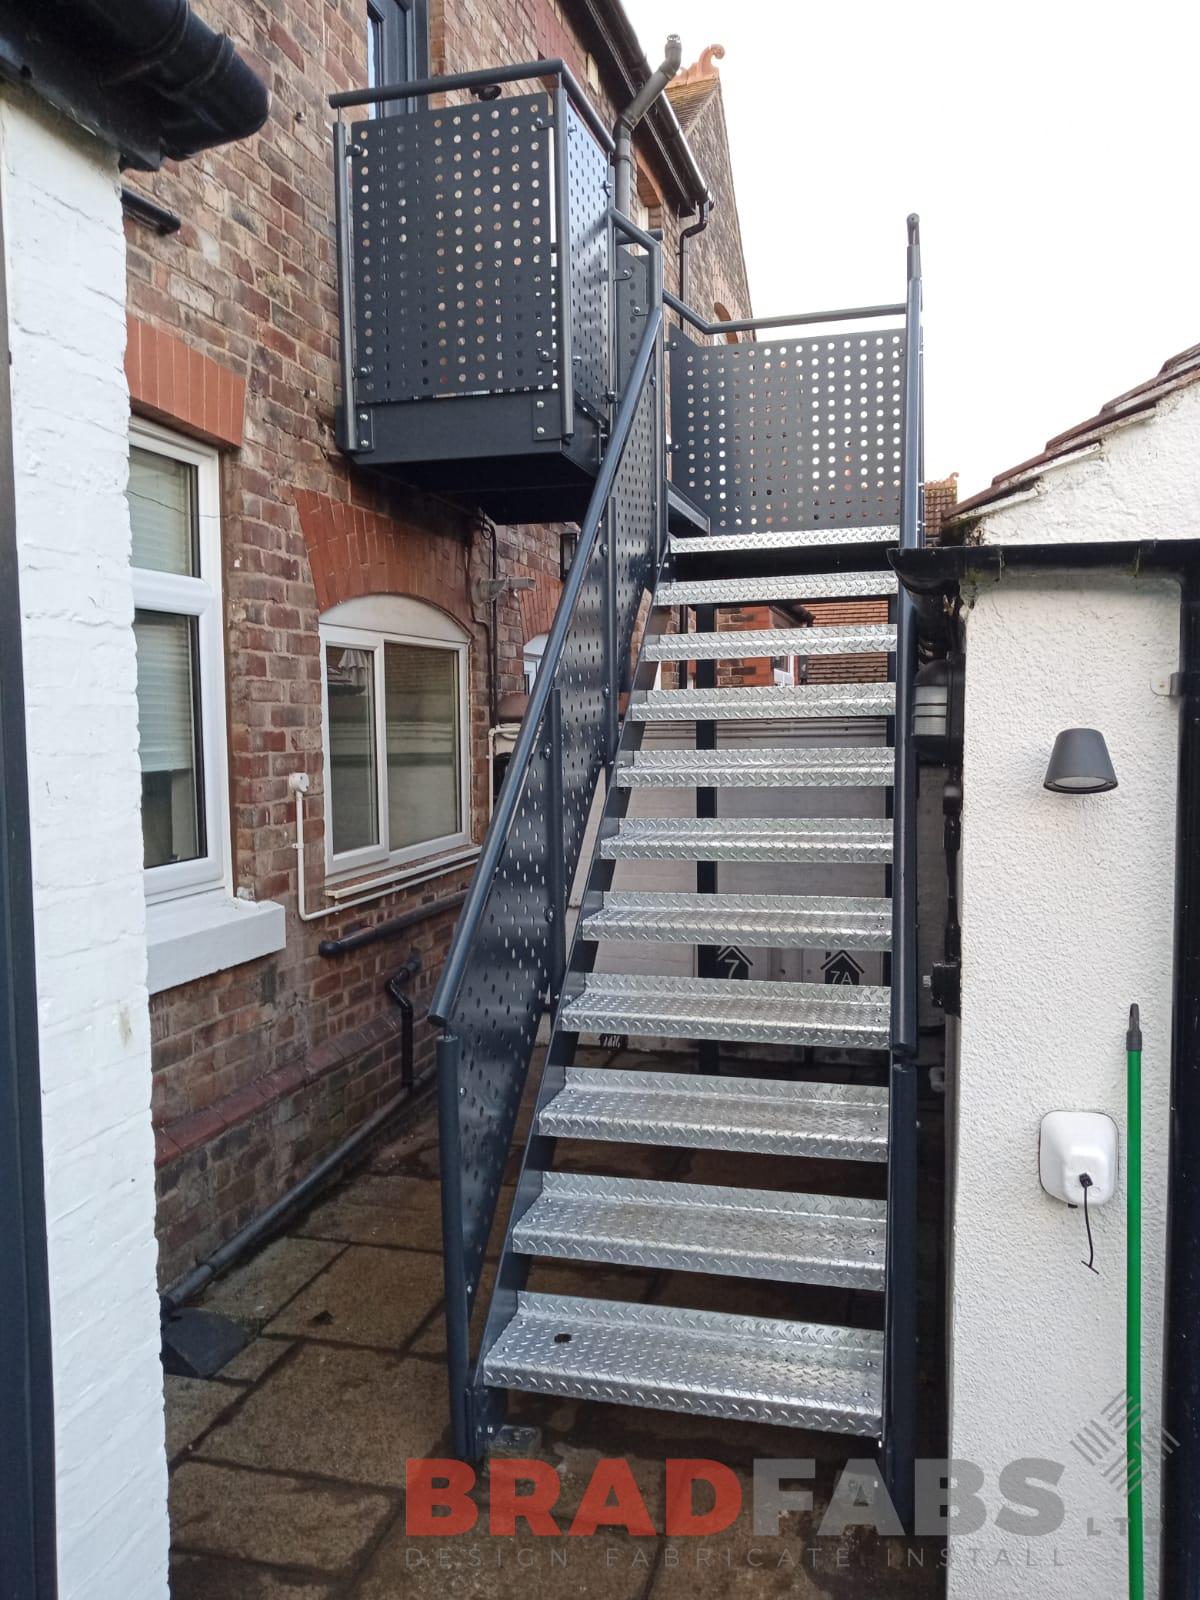 Bradfabs, external staircase, steel staircase, laser cut panelled balustrade, mild steel and galvanised